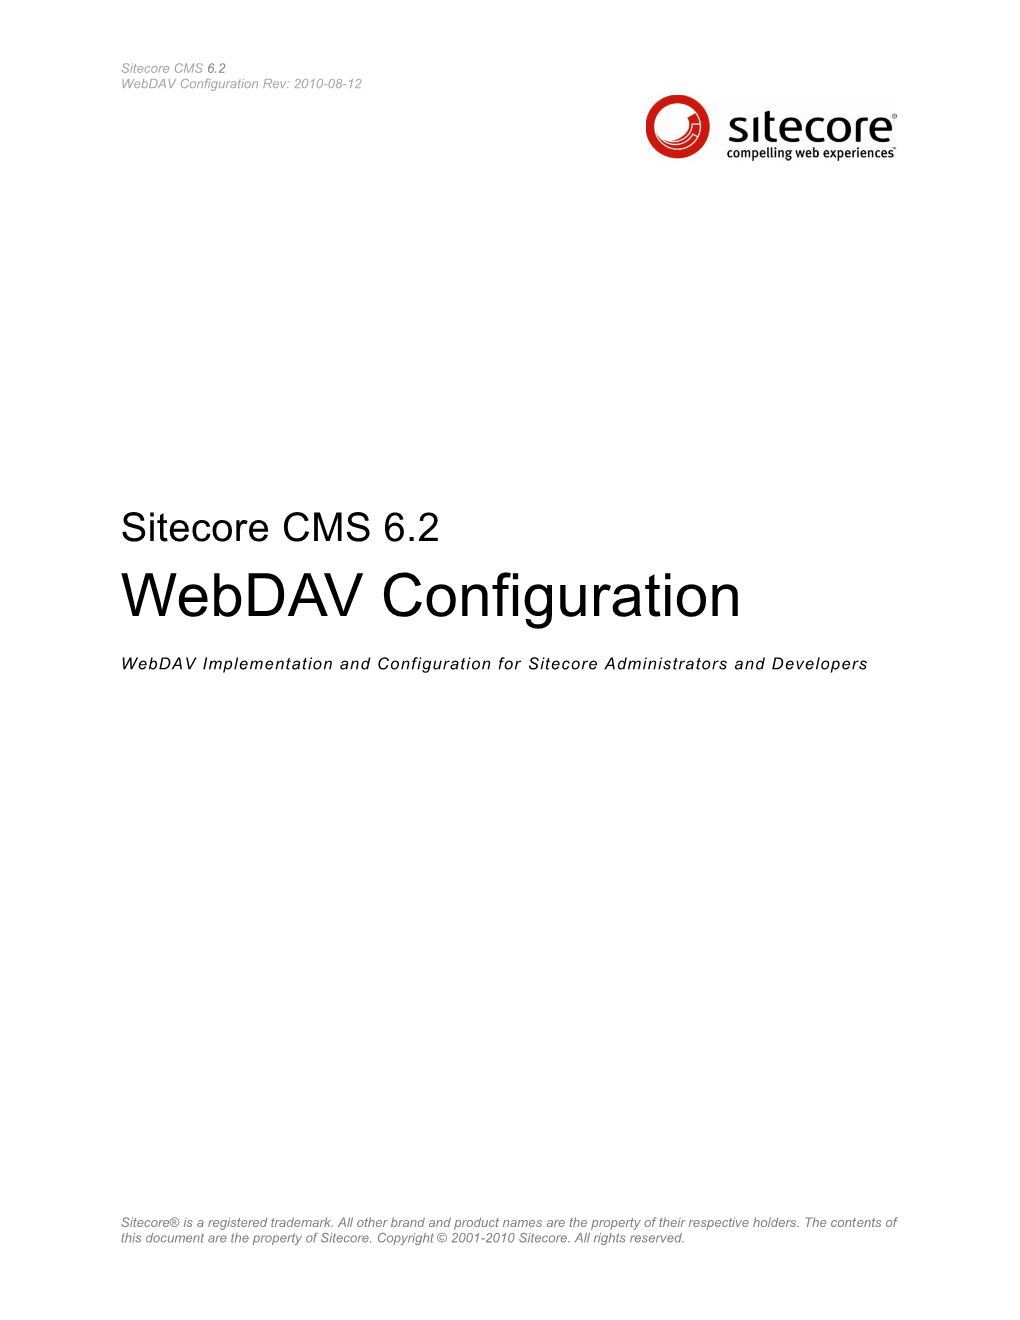 Webdav Configuration Rev: 2010-08-12